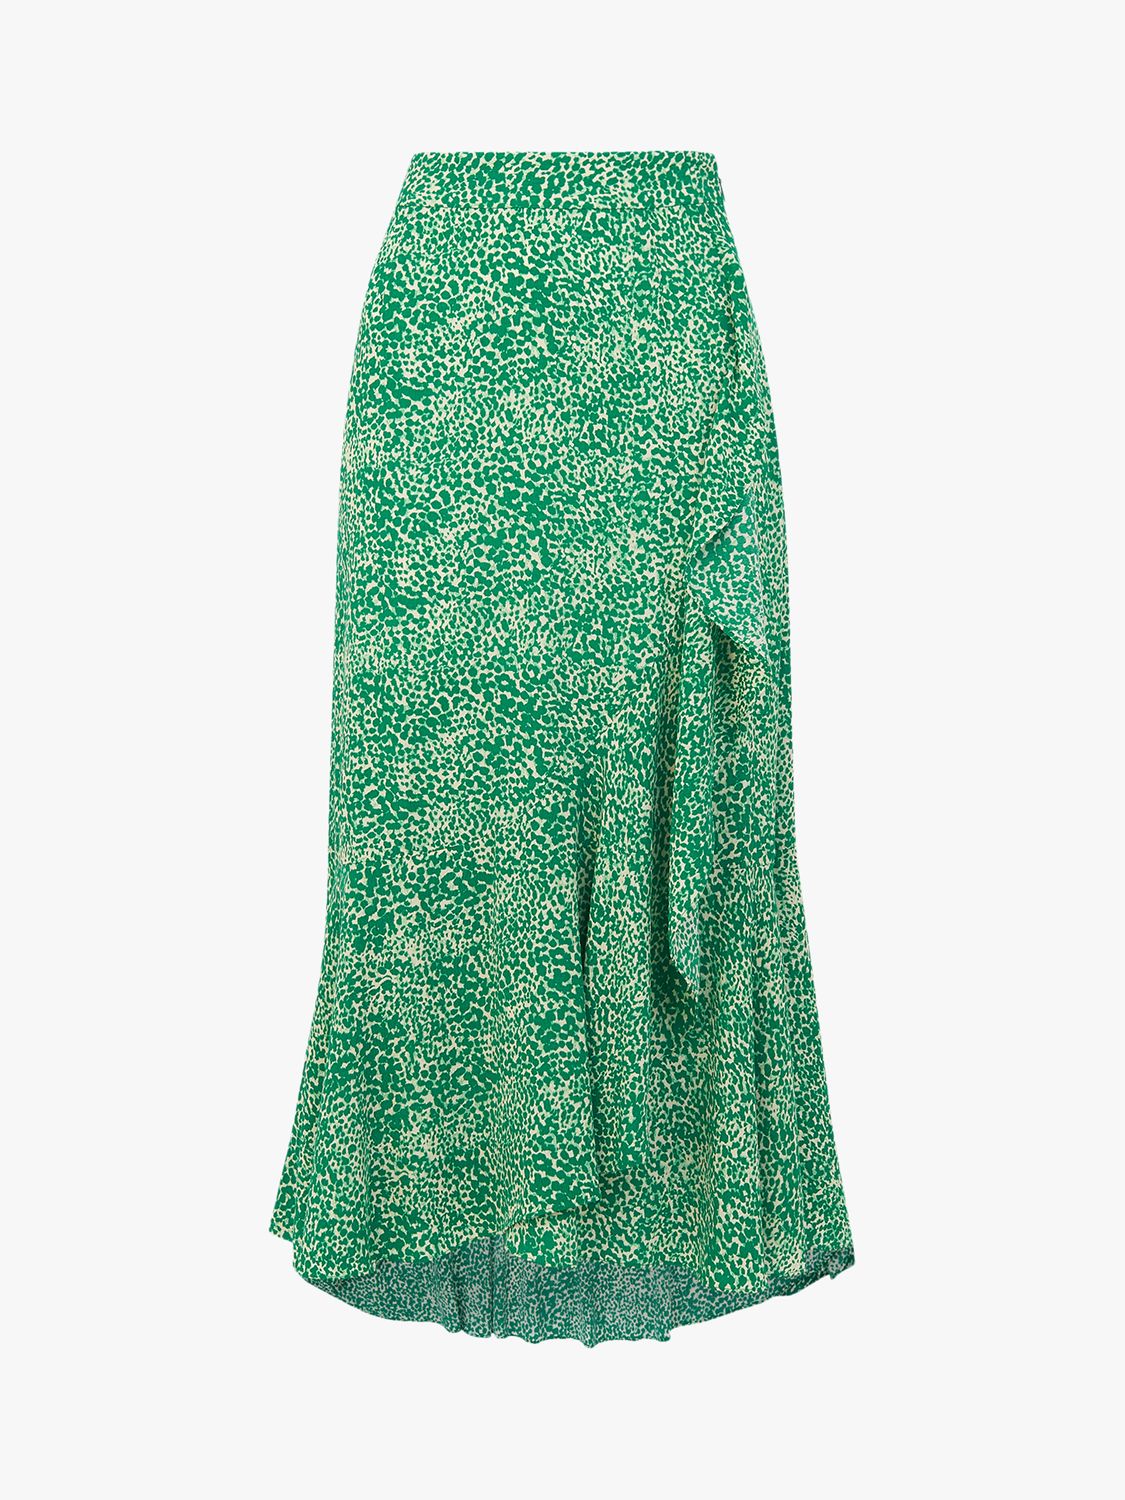 Whistles Blotted Animal Print Wrap Skirt, Green/Multi